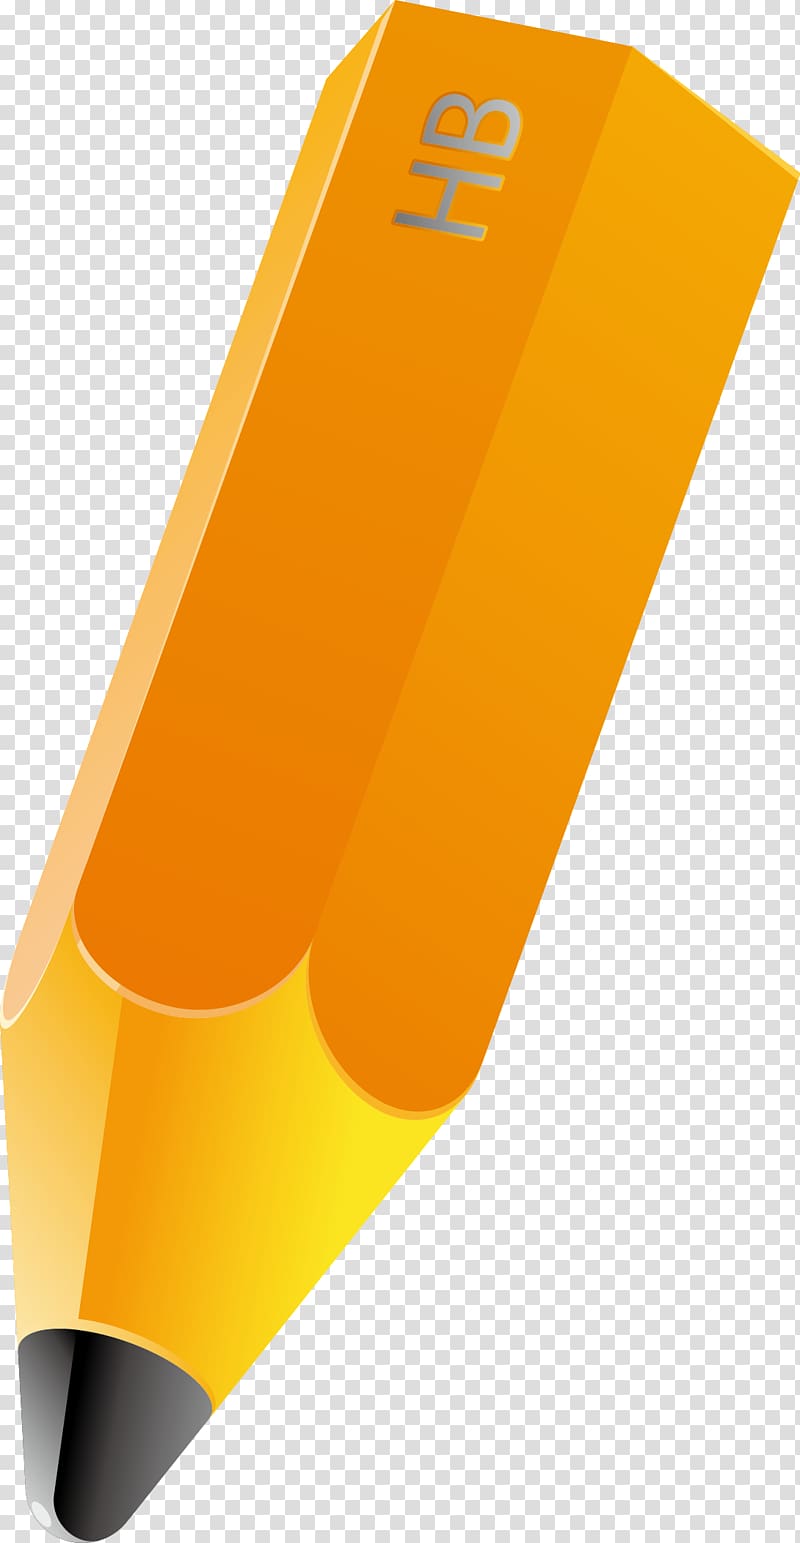 Pencil, Yellow pencil technology elements transparent background PNG clipart